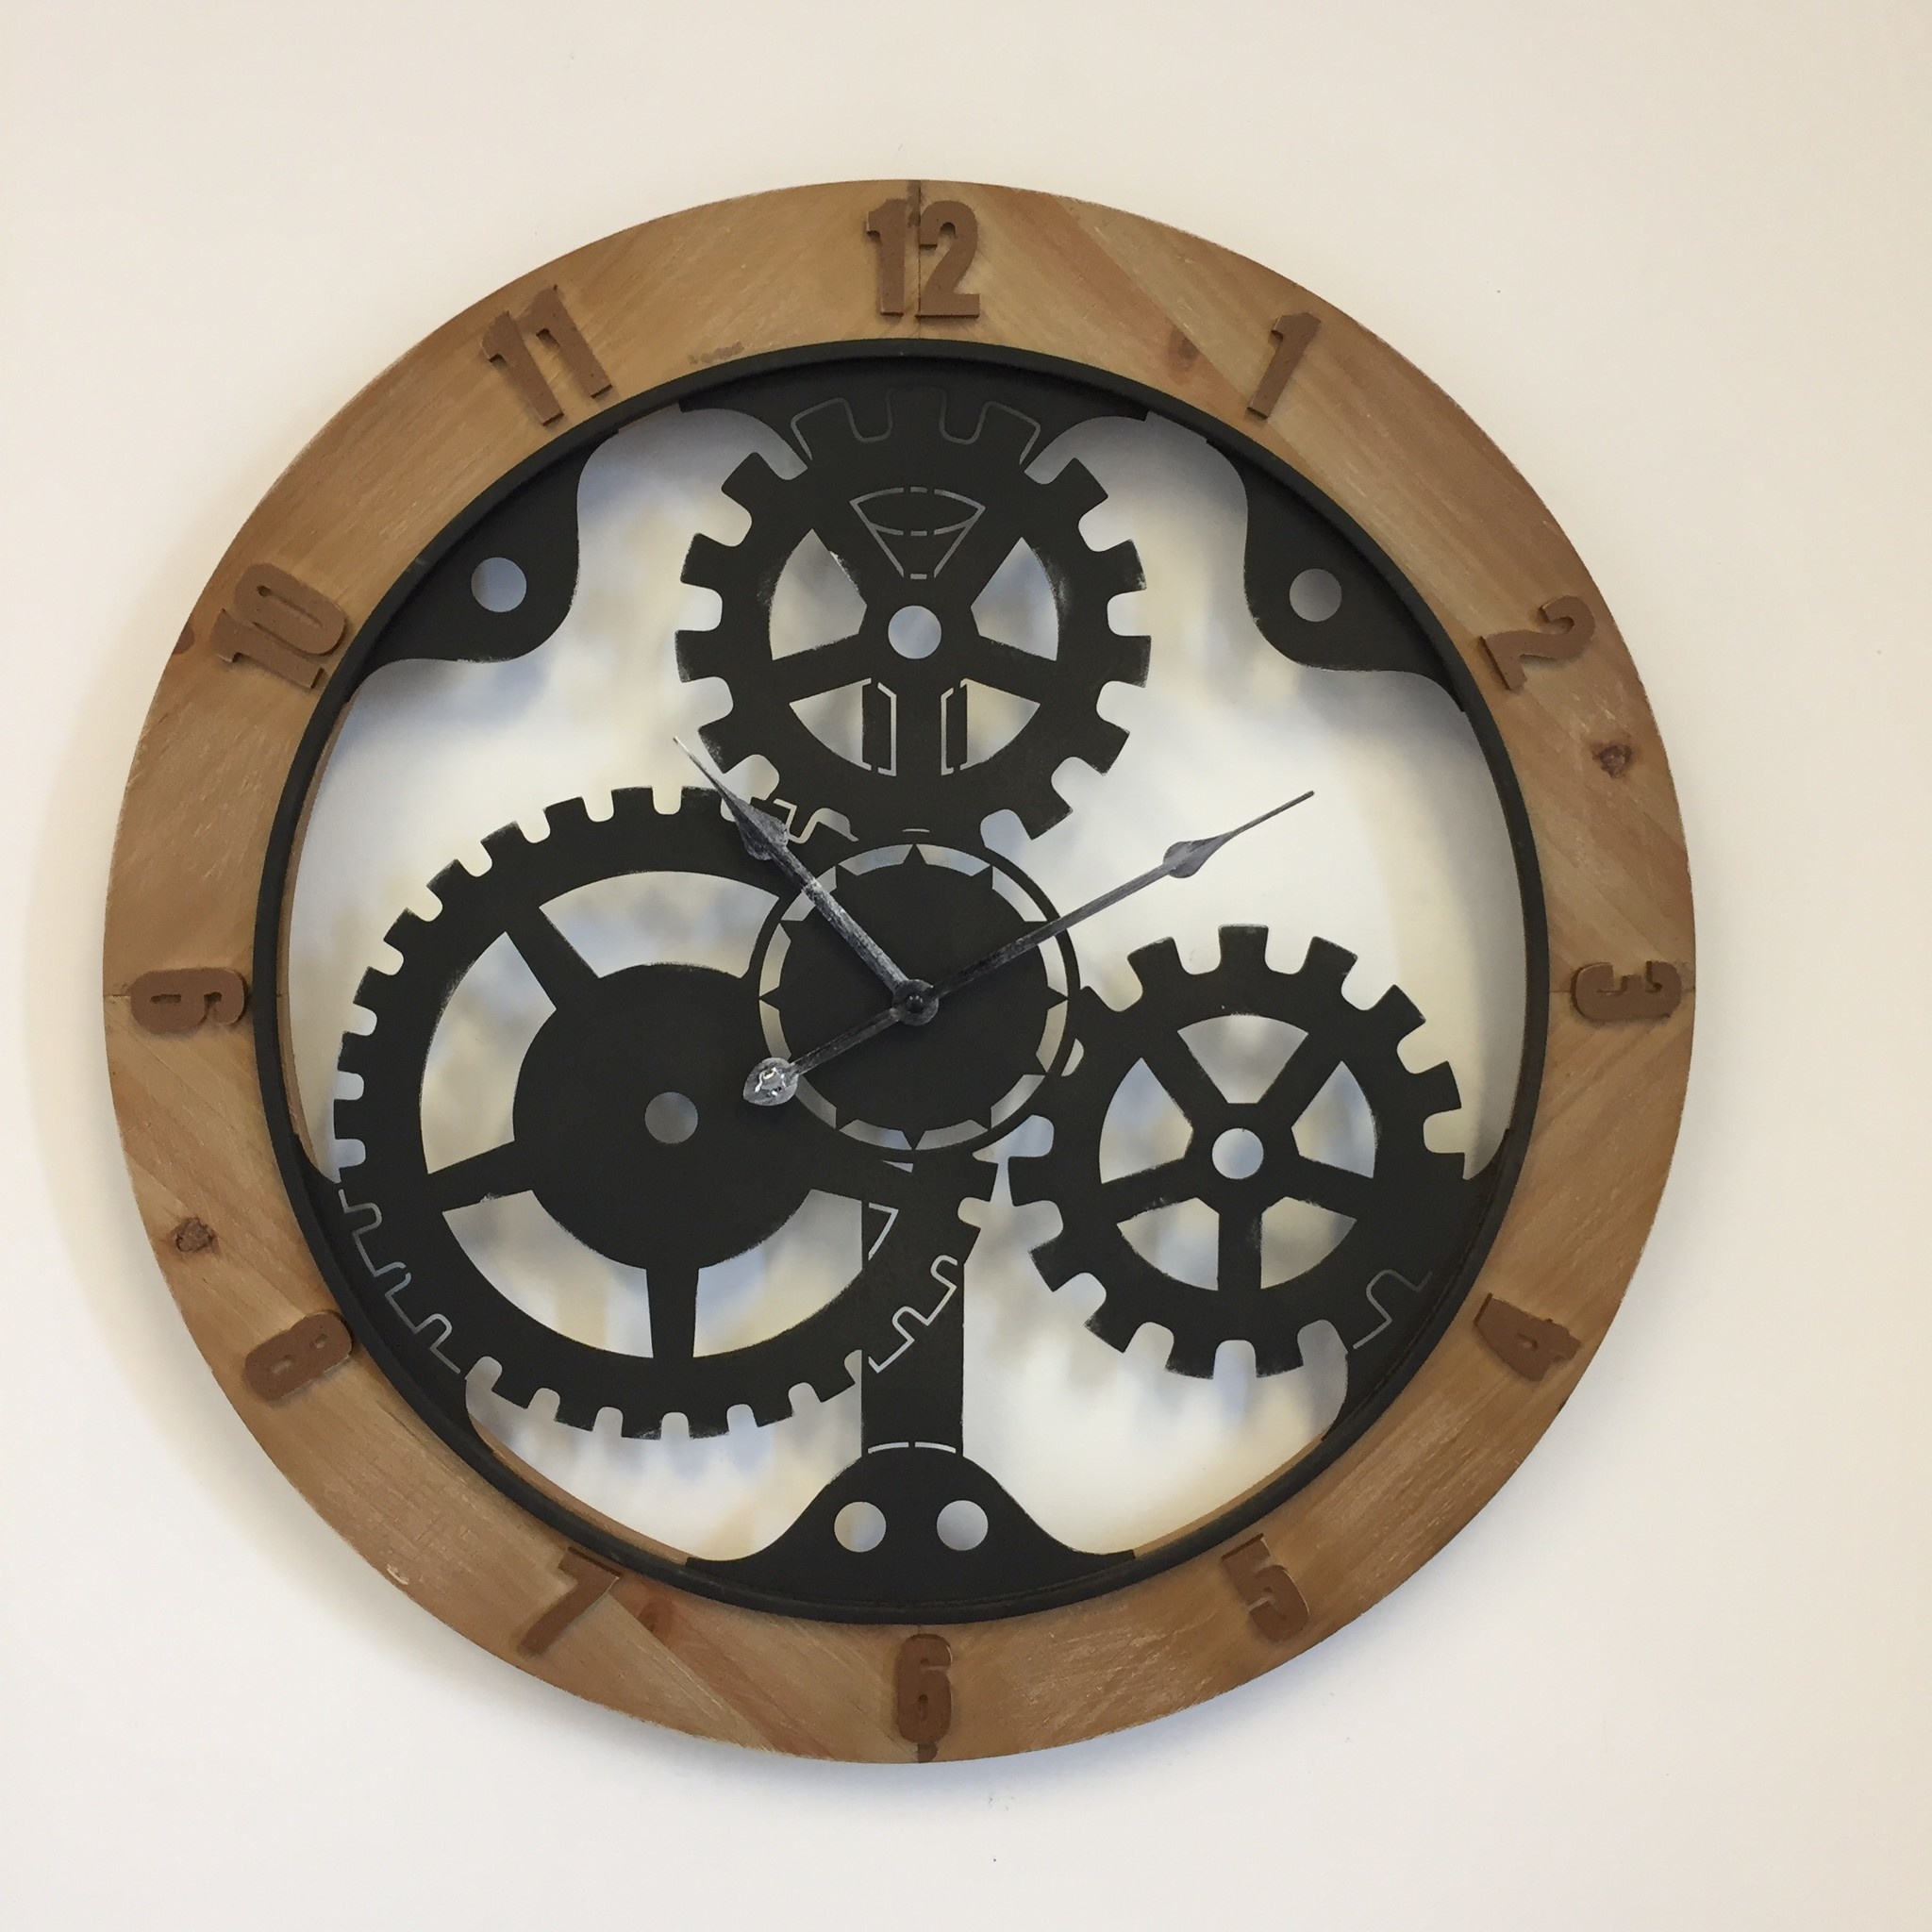 NiceTime Design - Wood & Gear Industrial Design wall clock